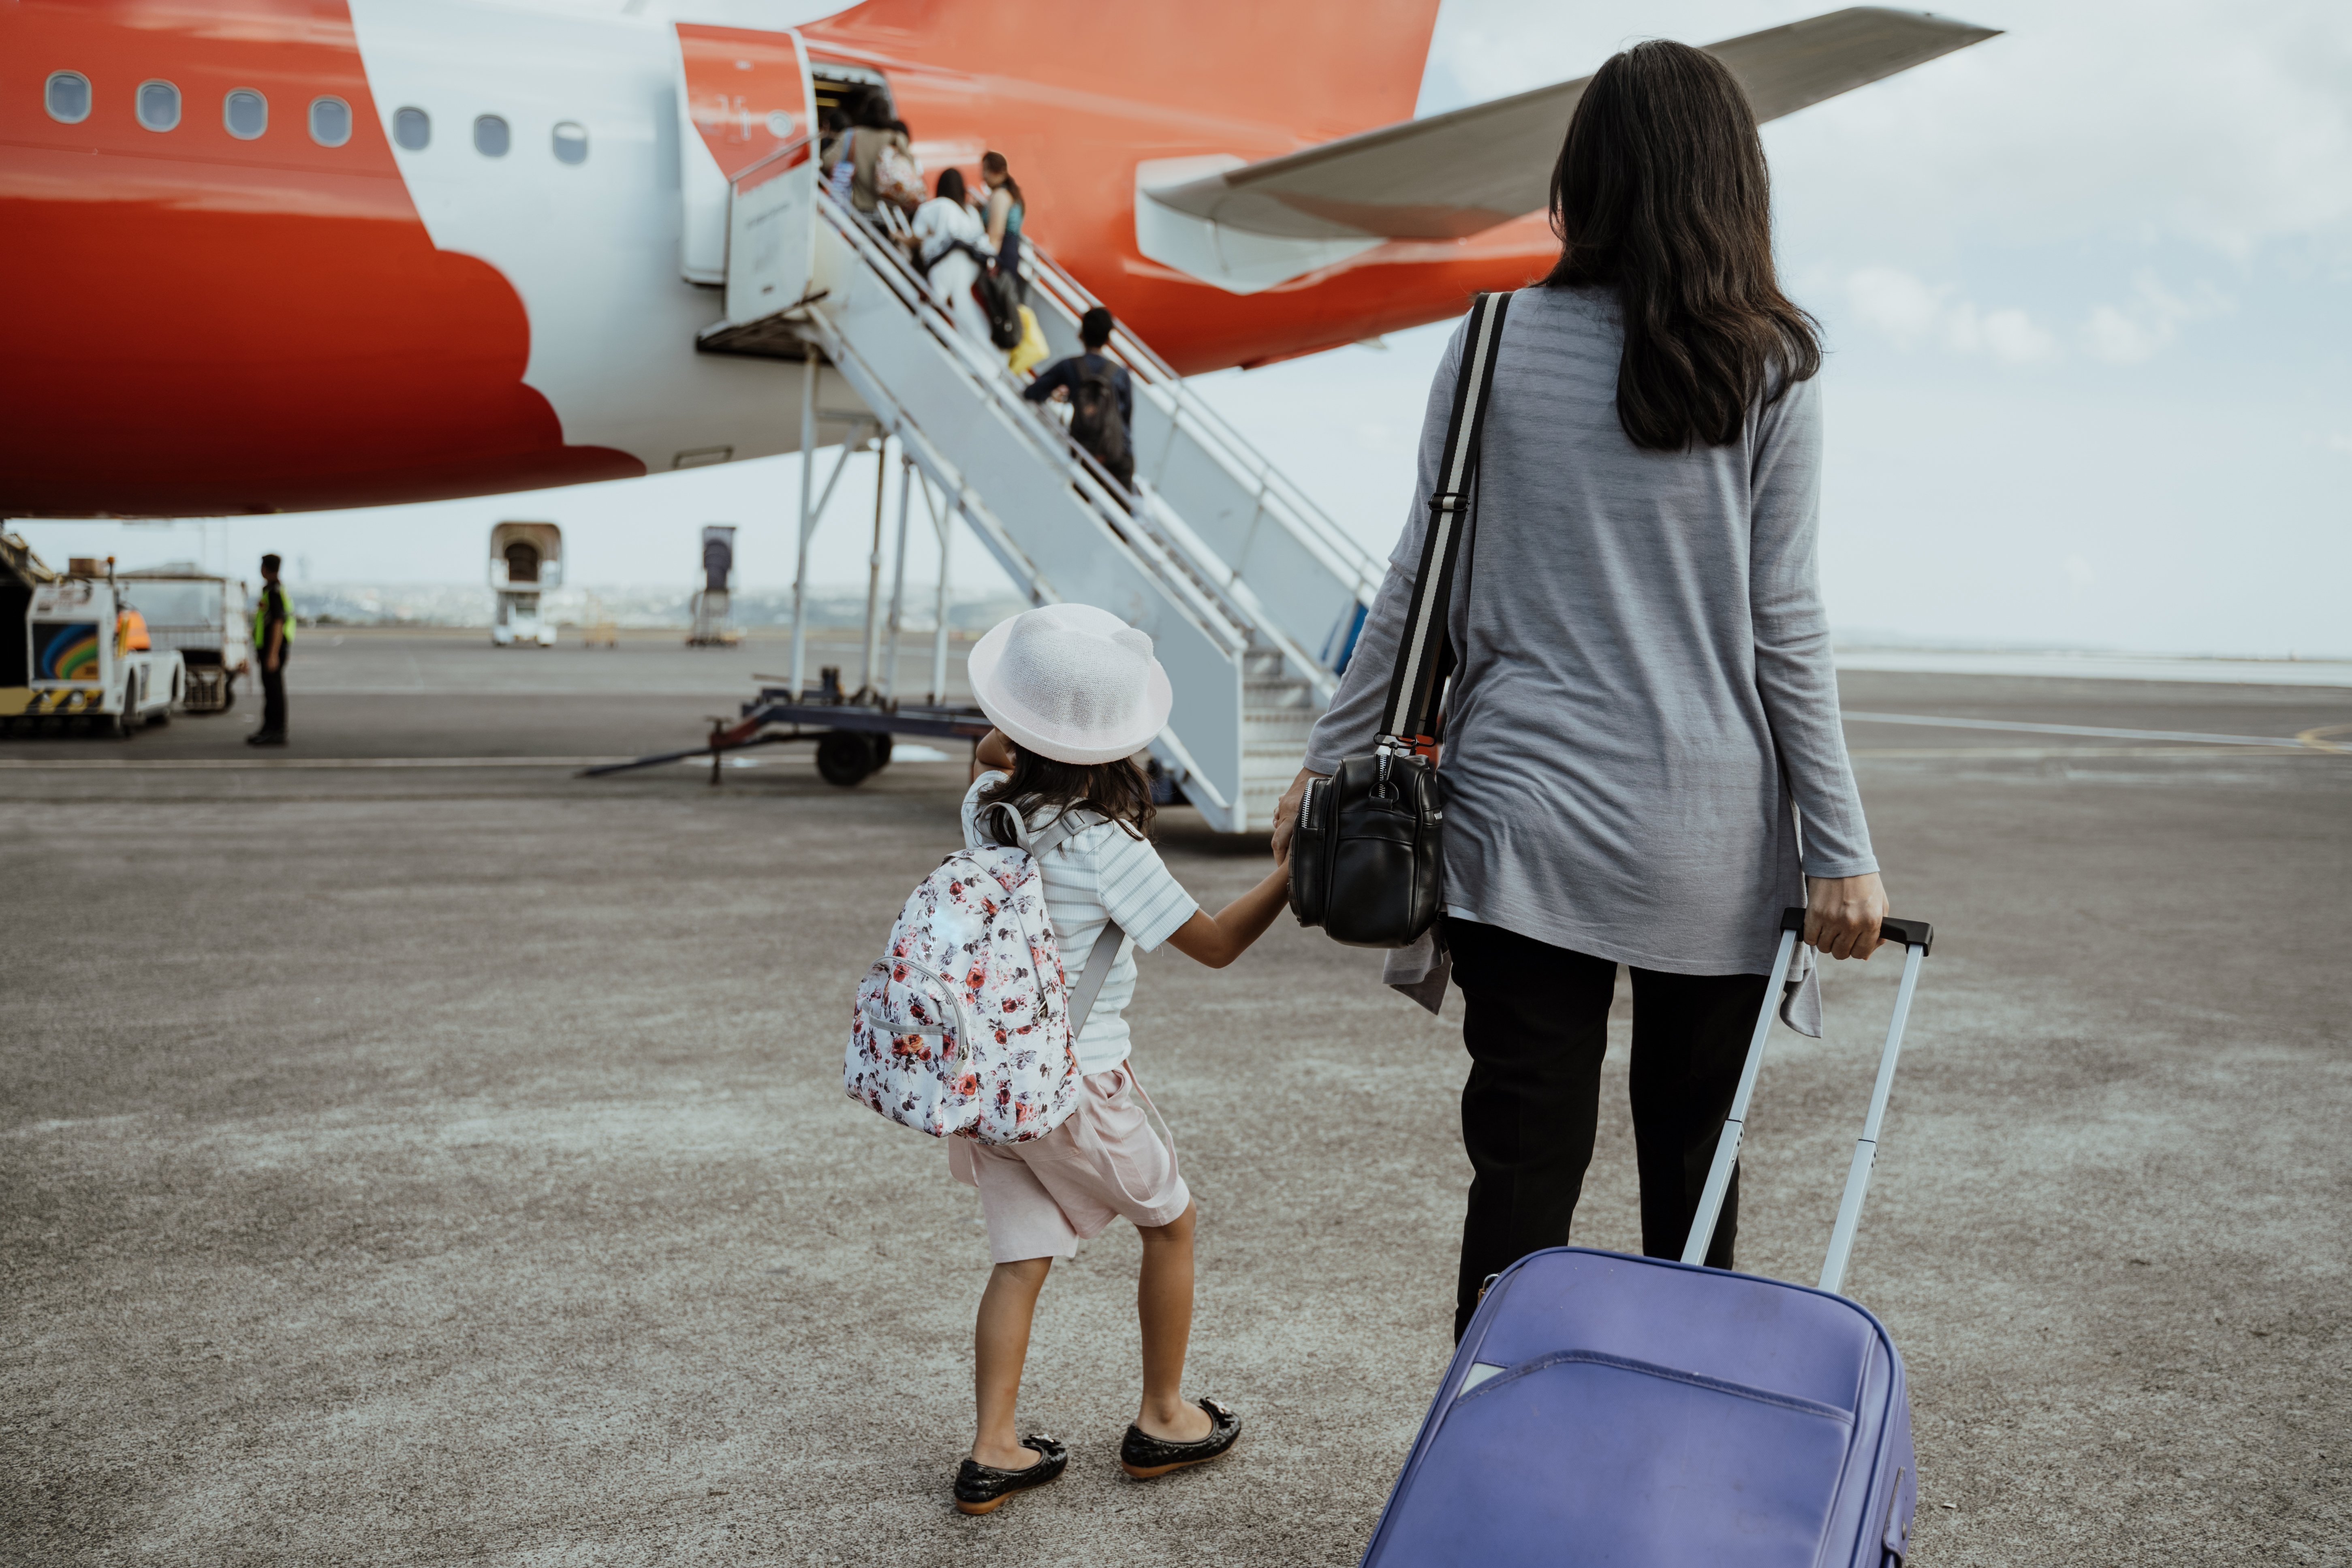 Madre e hija abordando avión. | Foto: Shutterstock